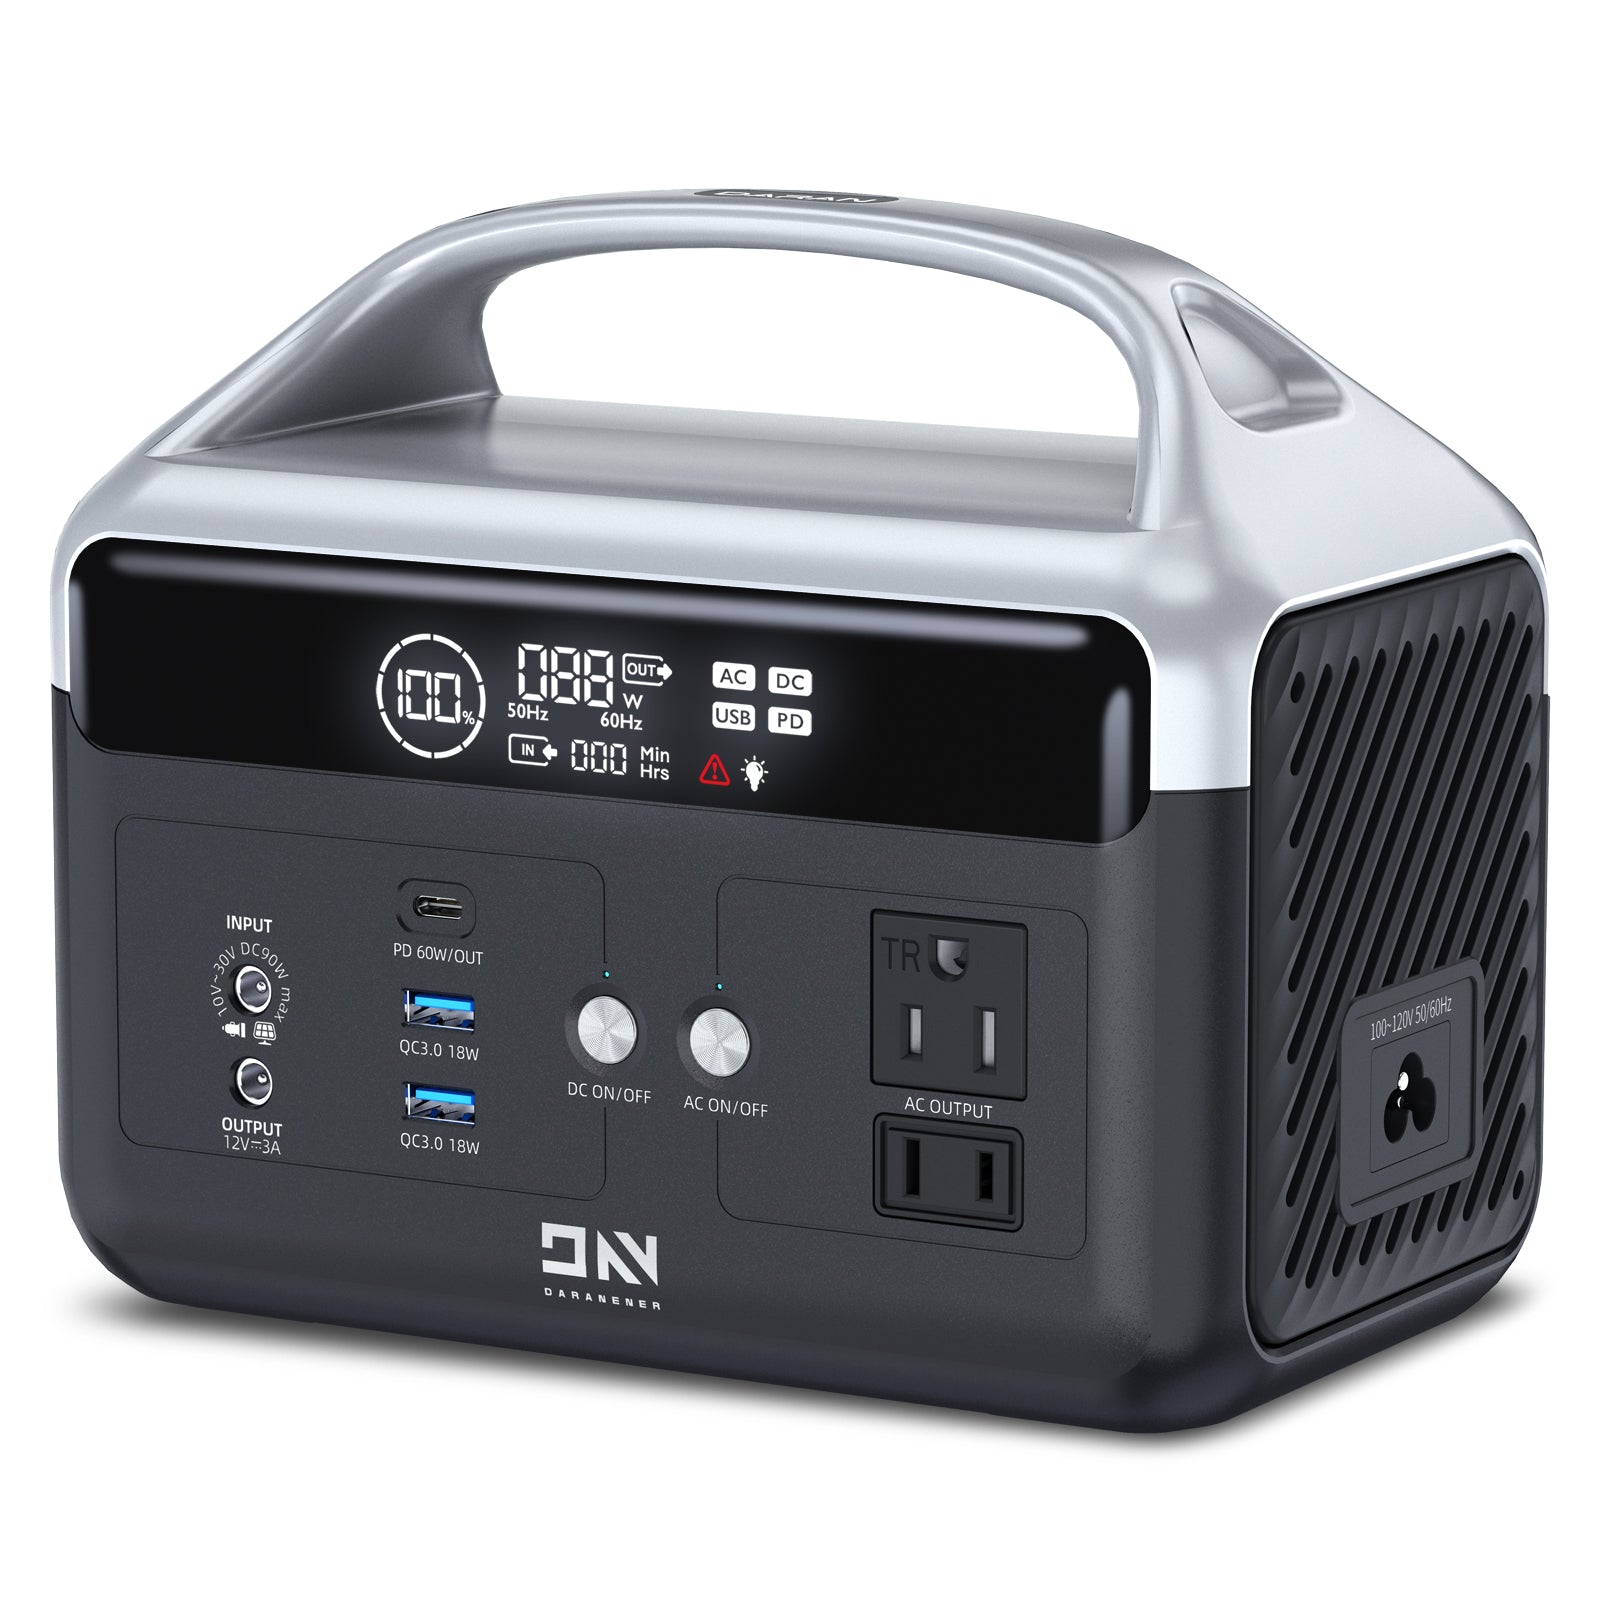 DaranEner NEOZ Portable Power Station Review